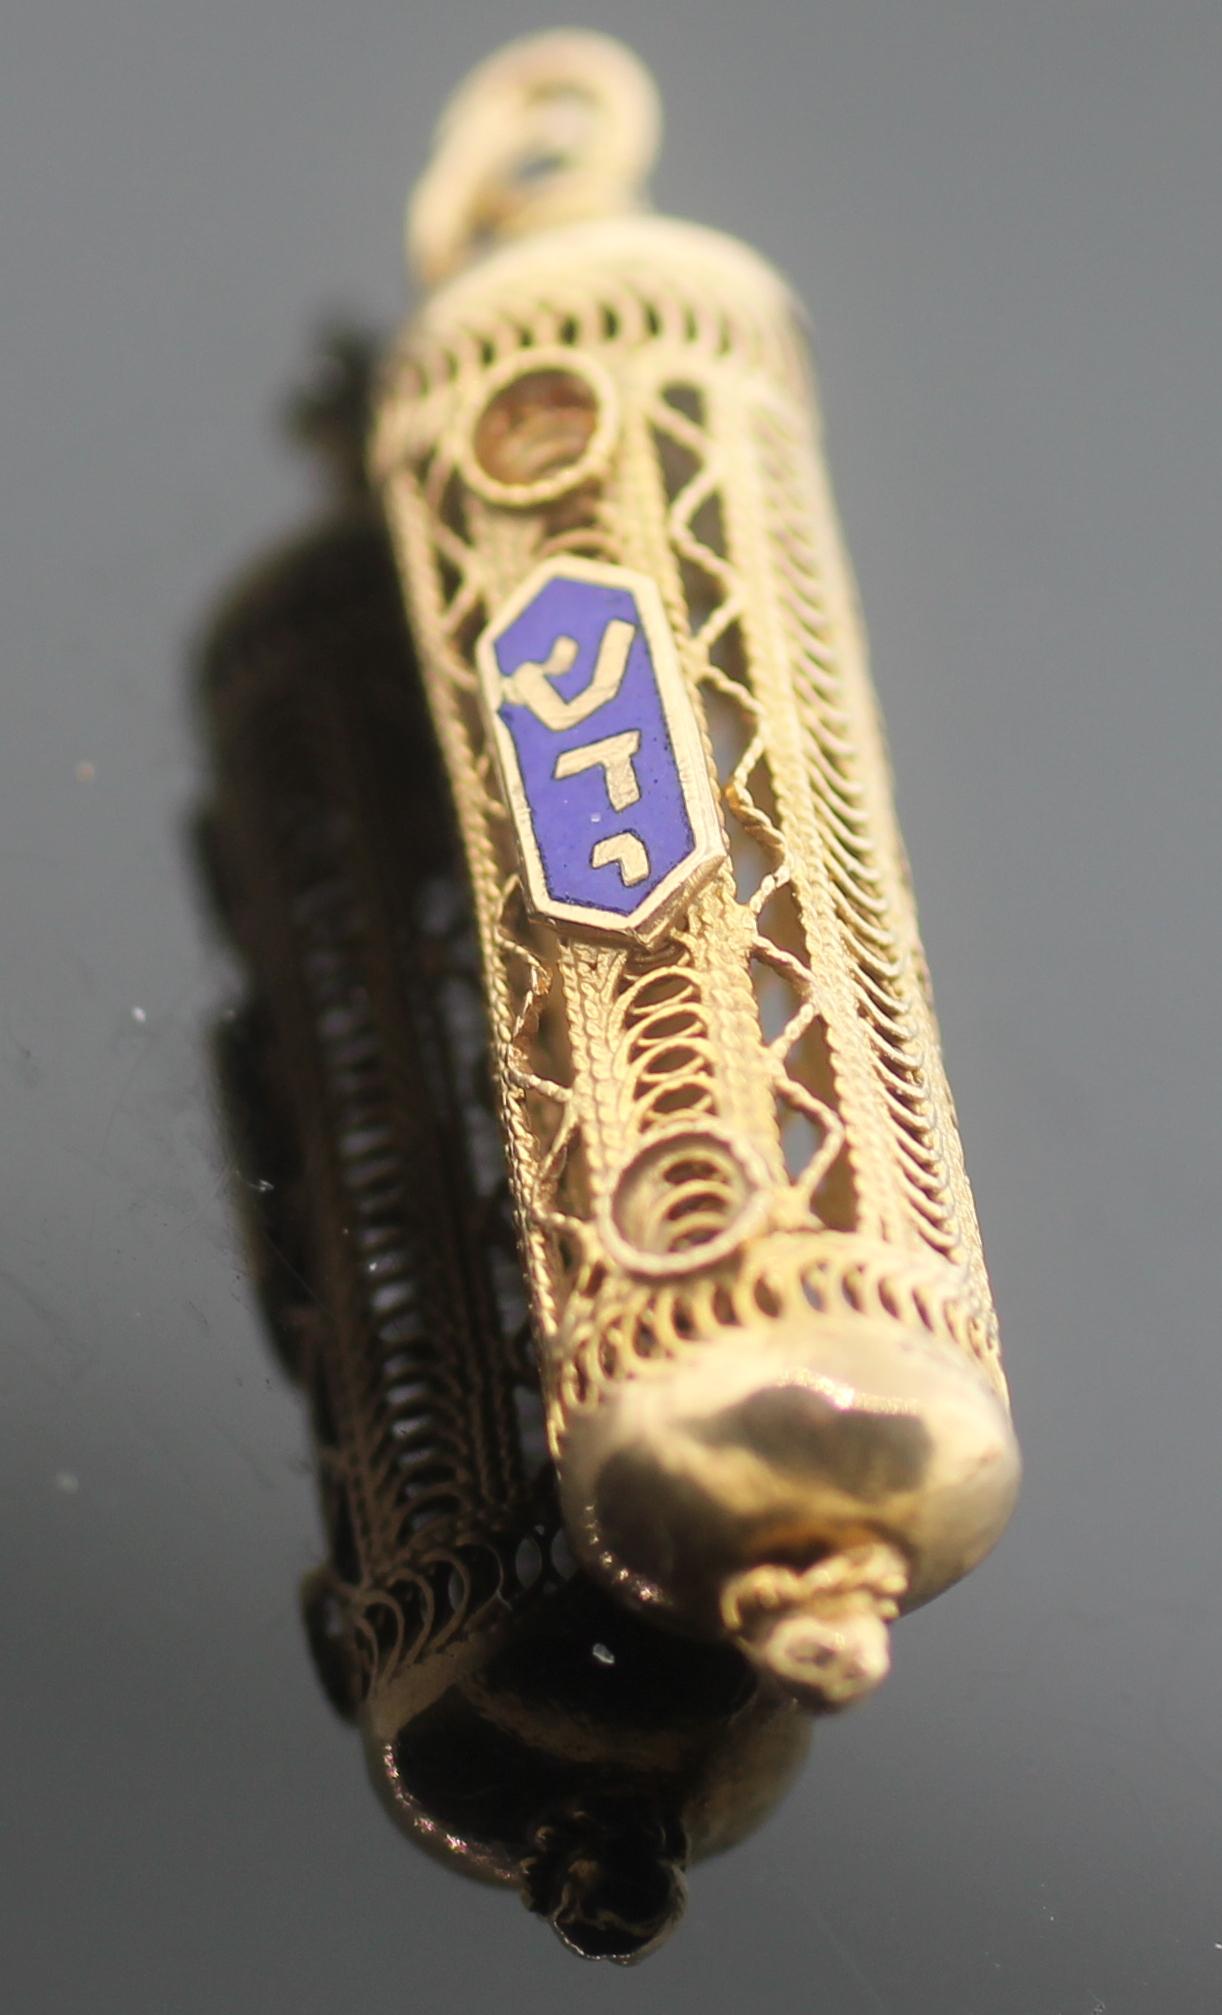 Estate Golden Jewish Mezuzah pendant Judaica Charm necklace
Yellow Gold
1.7 grams
35 mm long